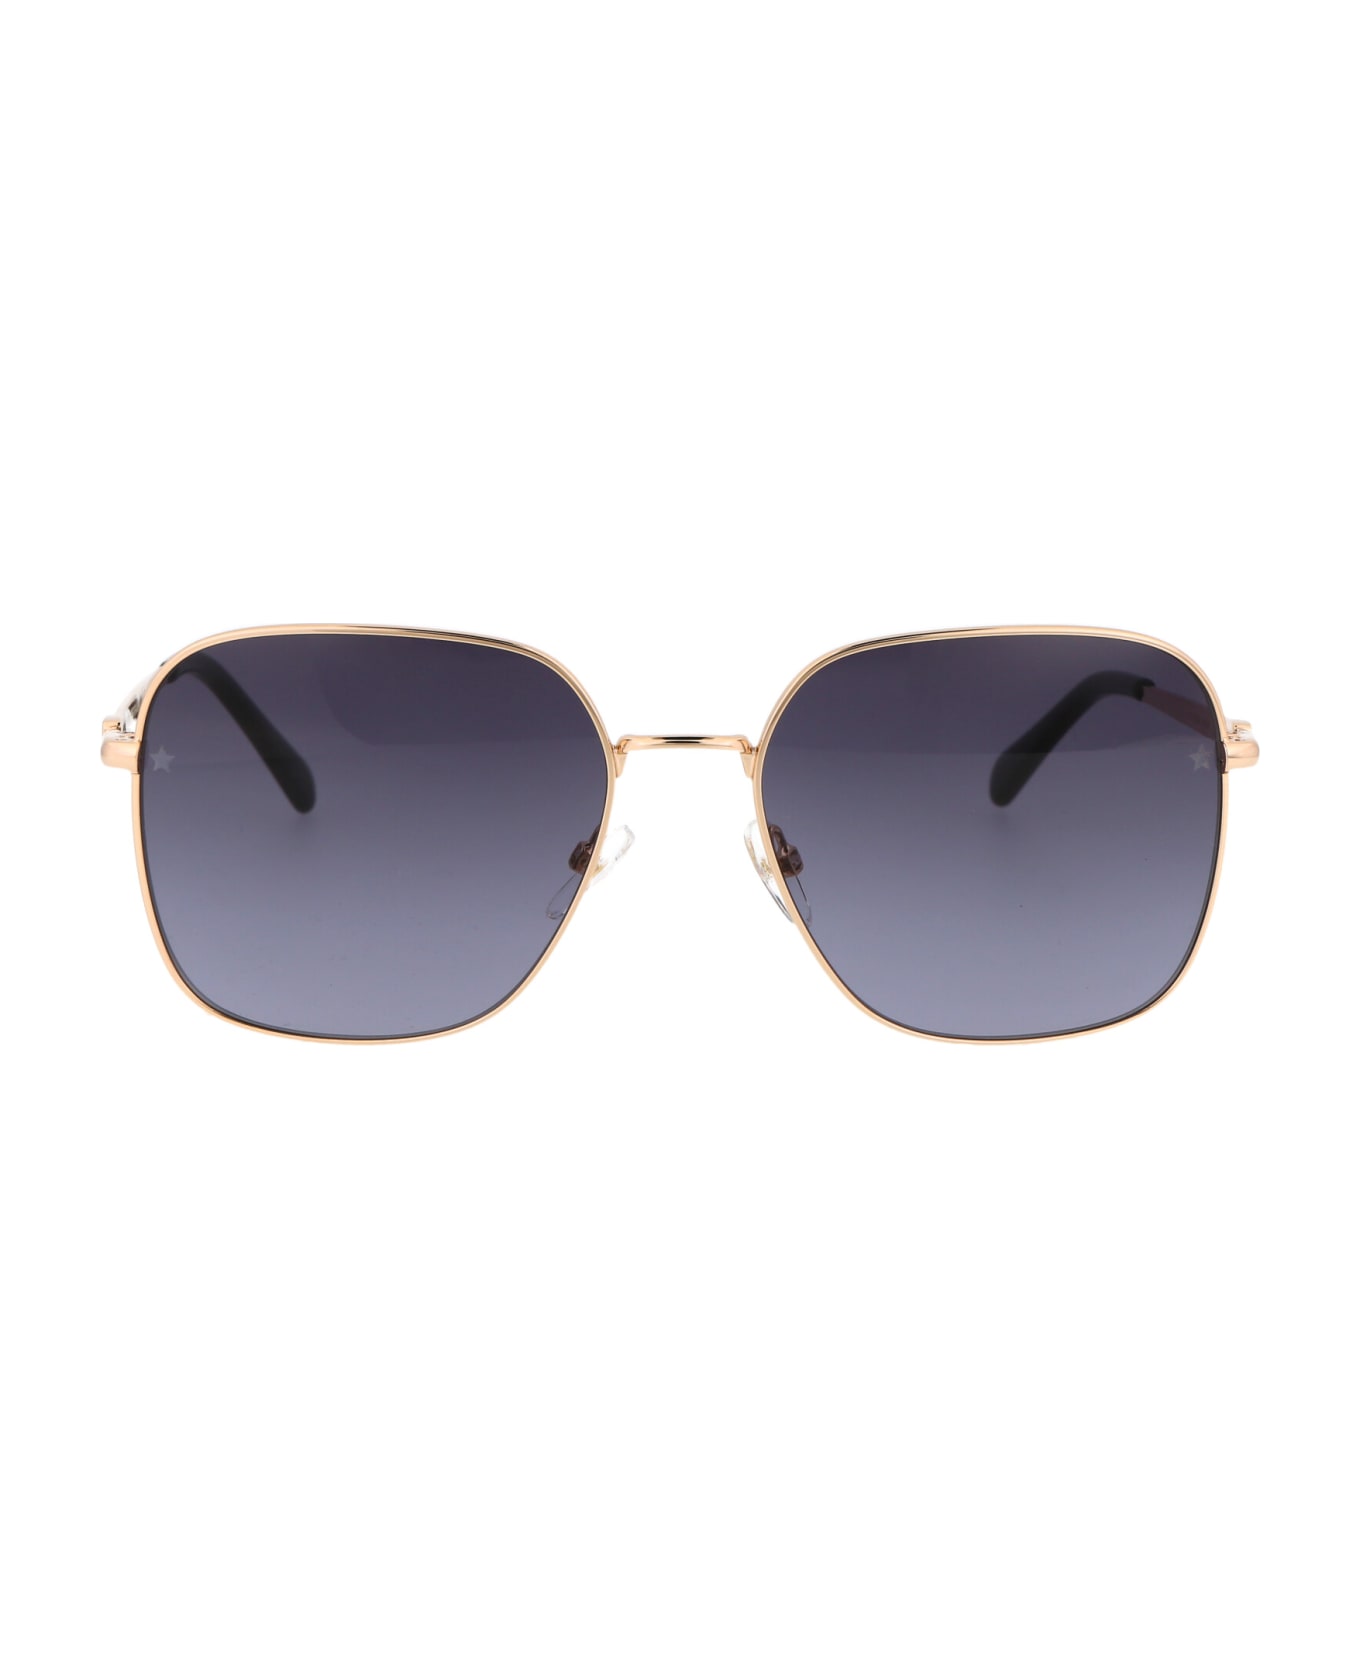 Chiara Ferragni Cf 1003/s Sunglasses - RHL9O GOLD BLACK